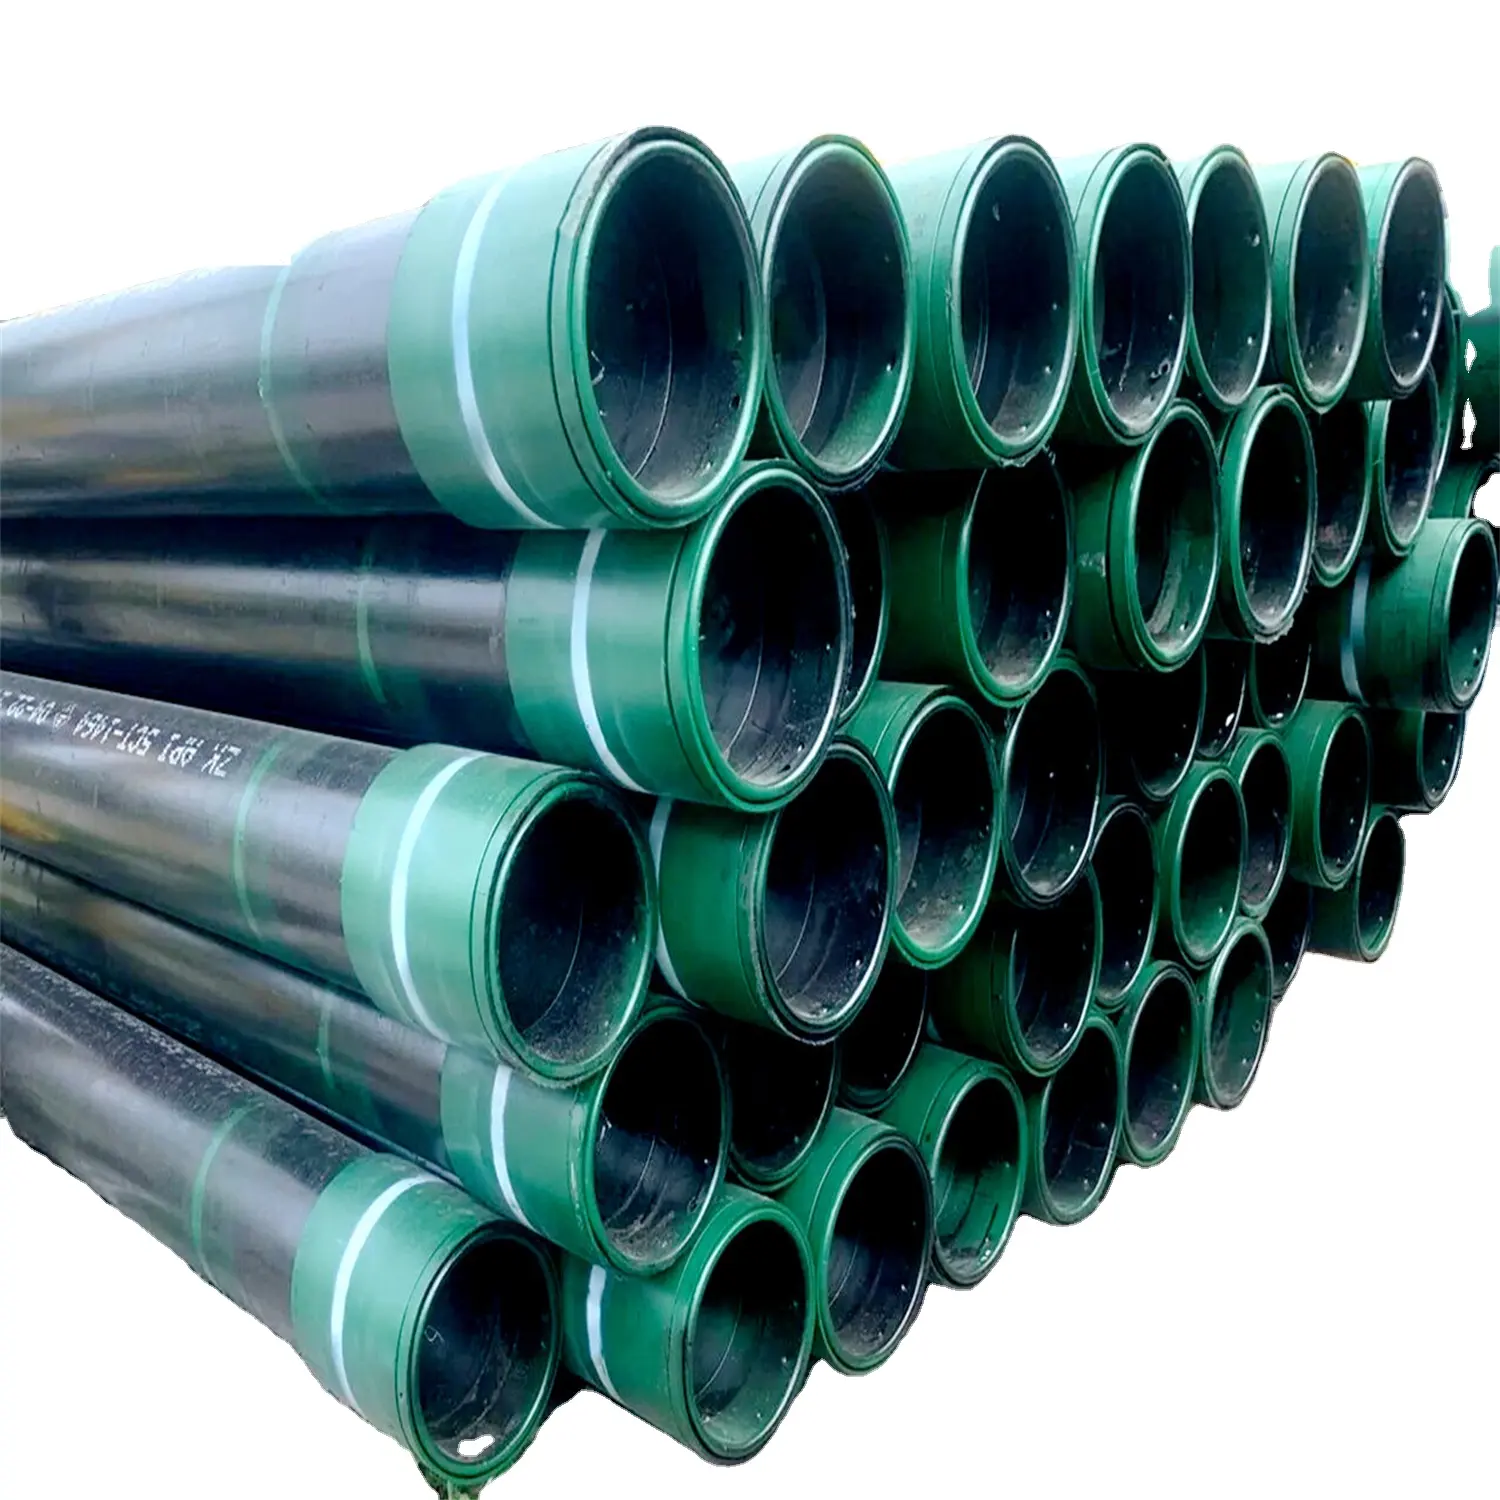 blue ocean steel api tube casing 13 3 8 J55 k55 N80 N80Q L80 btc pipe